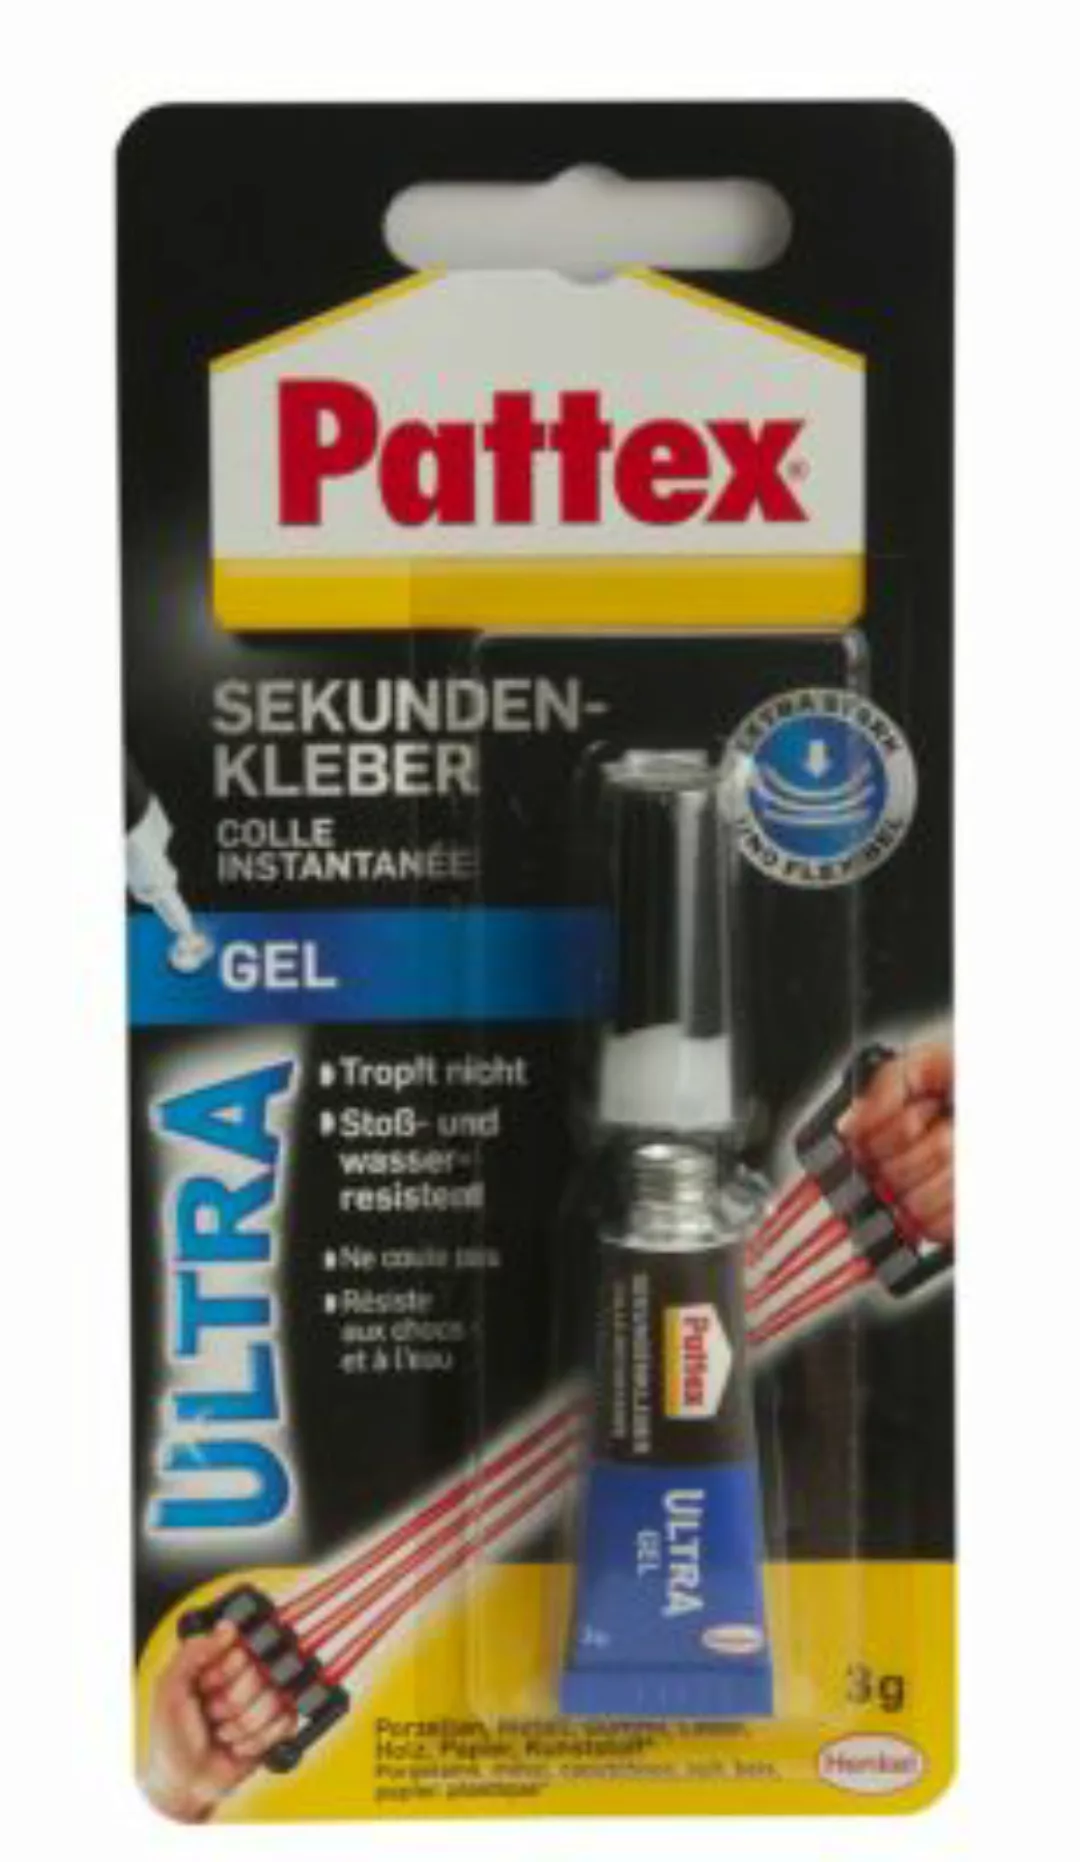 Pattex Sekundenkleber Ultra Gel flexibler Alleskleber 3g günstig online kaufen